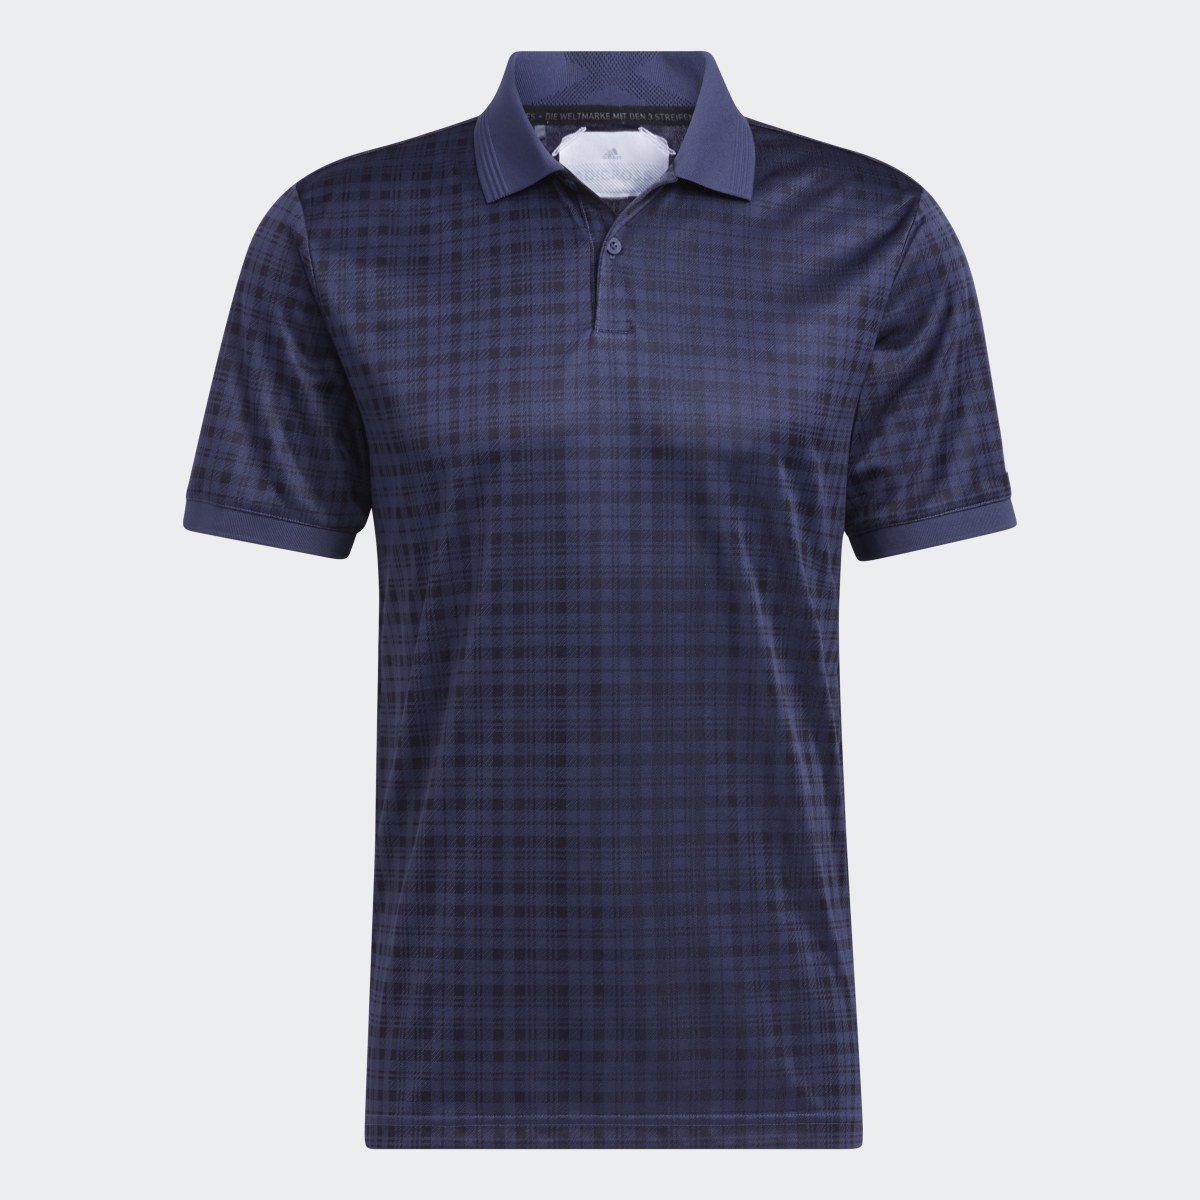 Adidas Adicross Plaid Golf Polo Shirt. 5